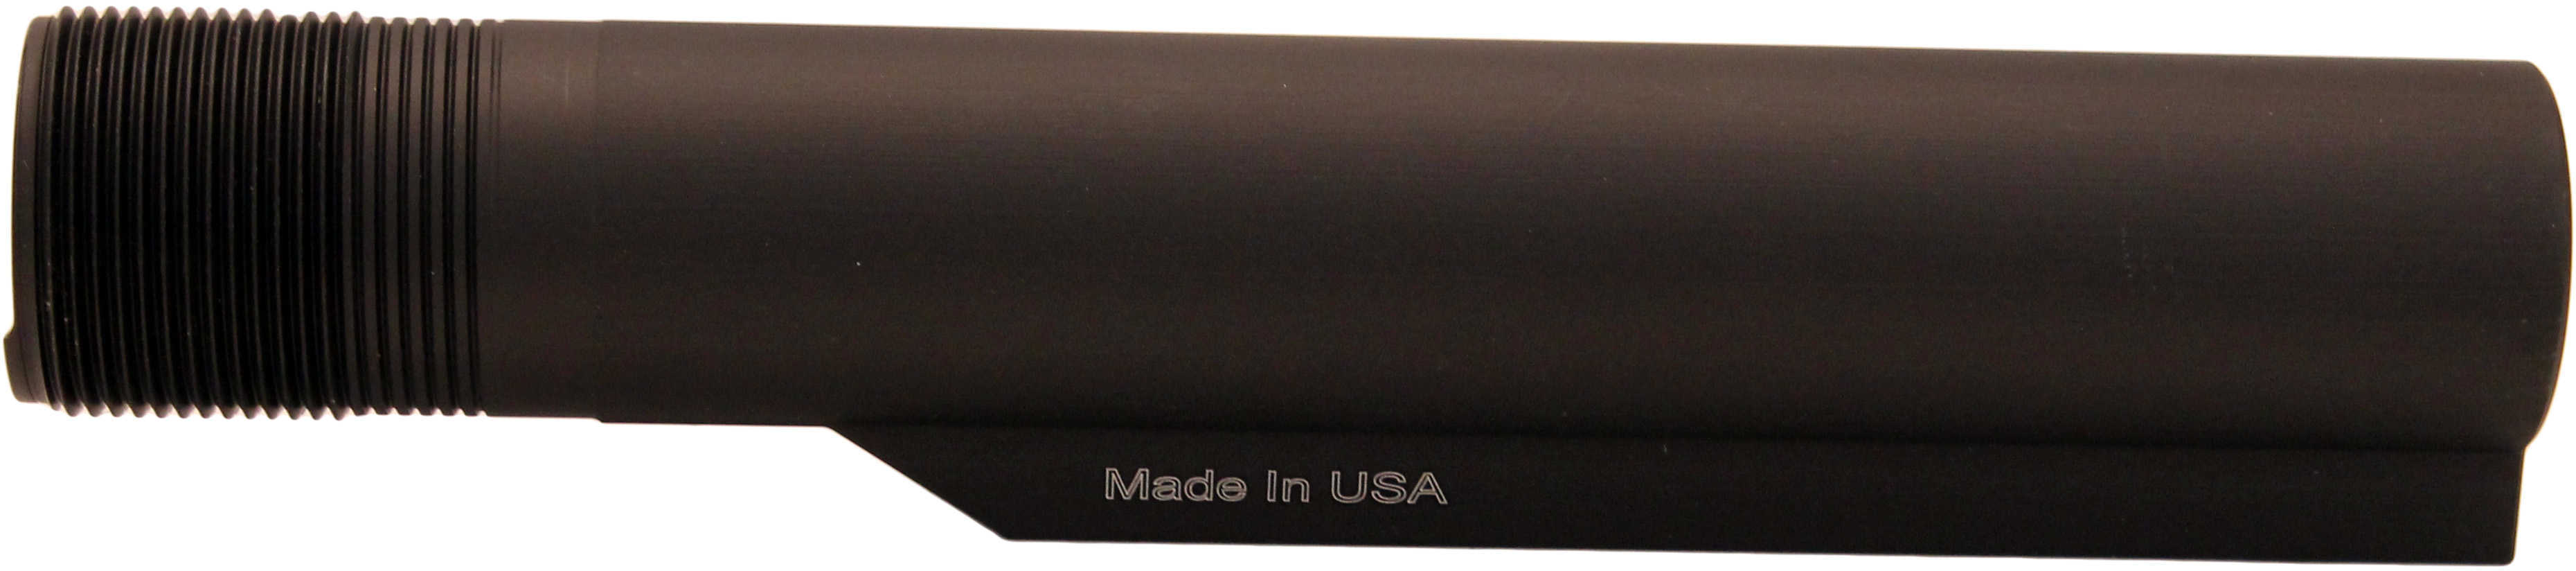 Leapers Inc. - UTG UTG PRO Receiver Extension Tube 6 Position Mil-Spec Black Finish TLU001